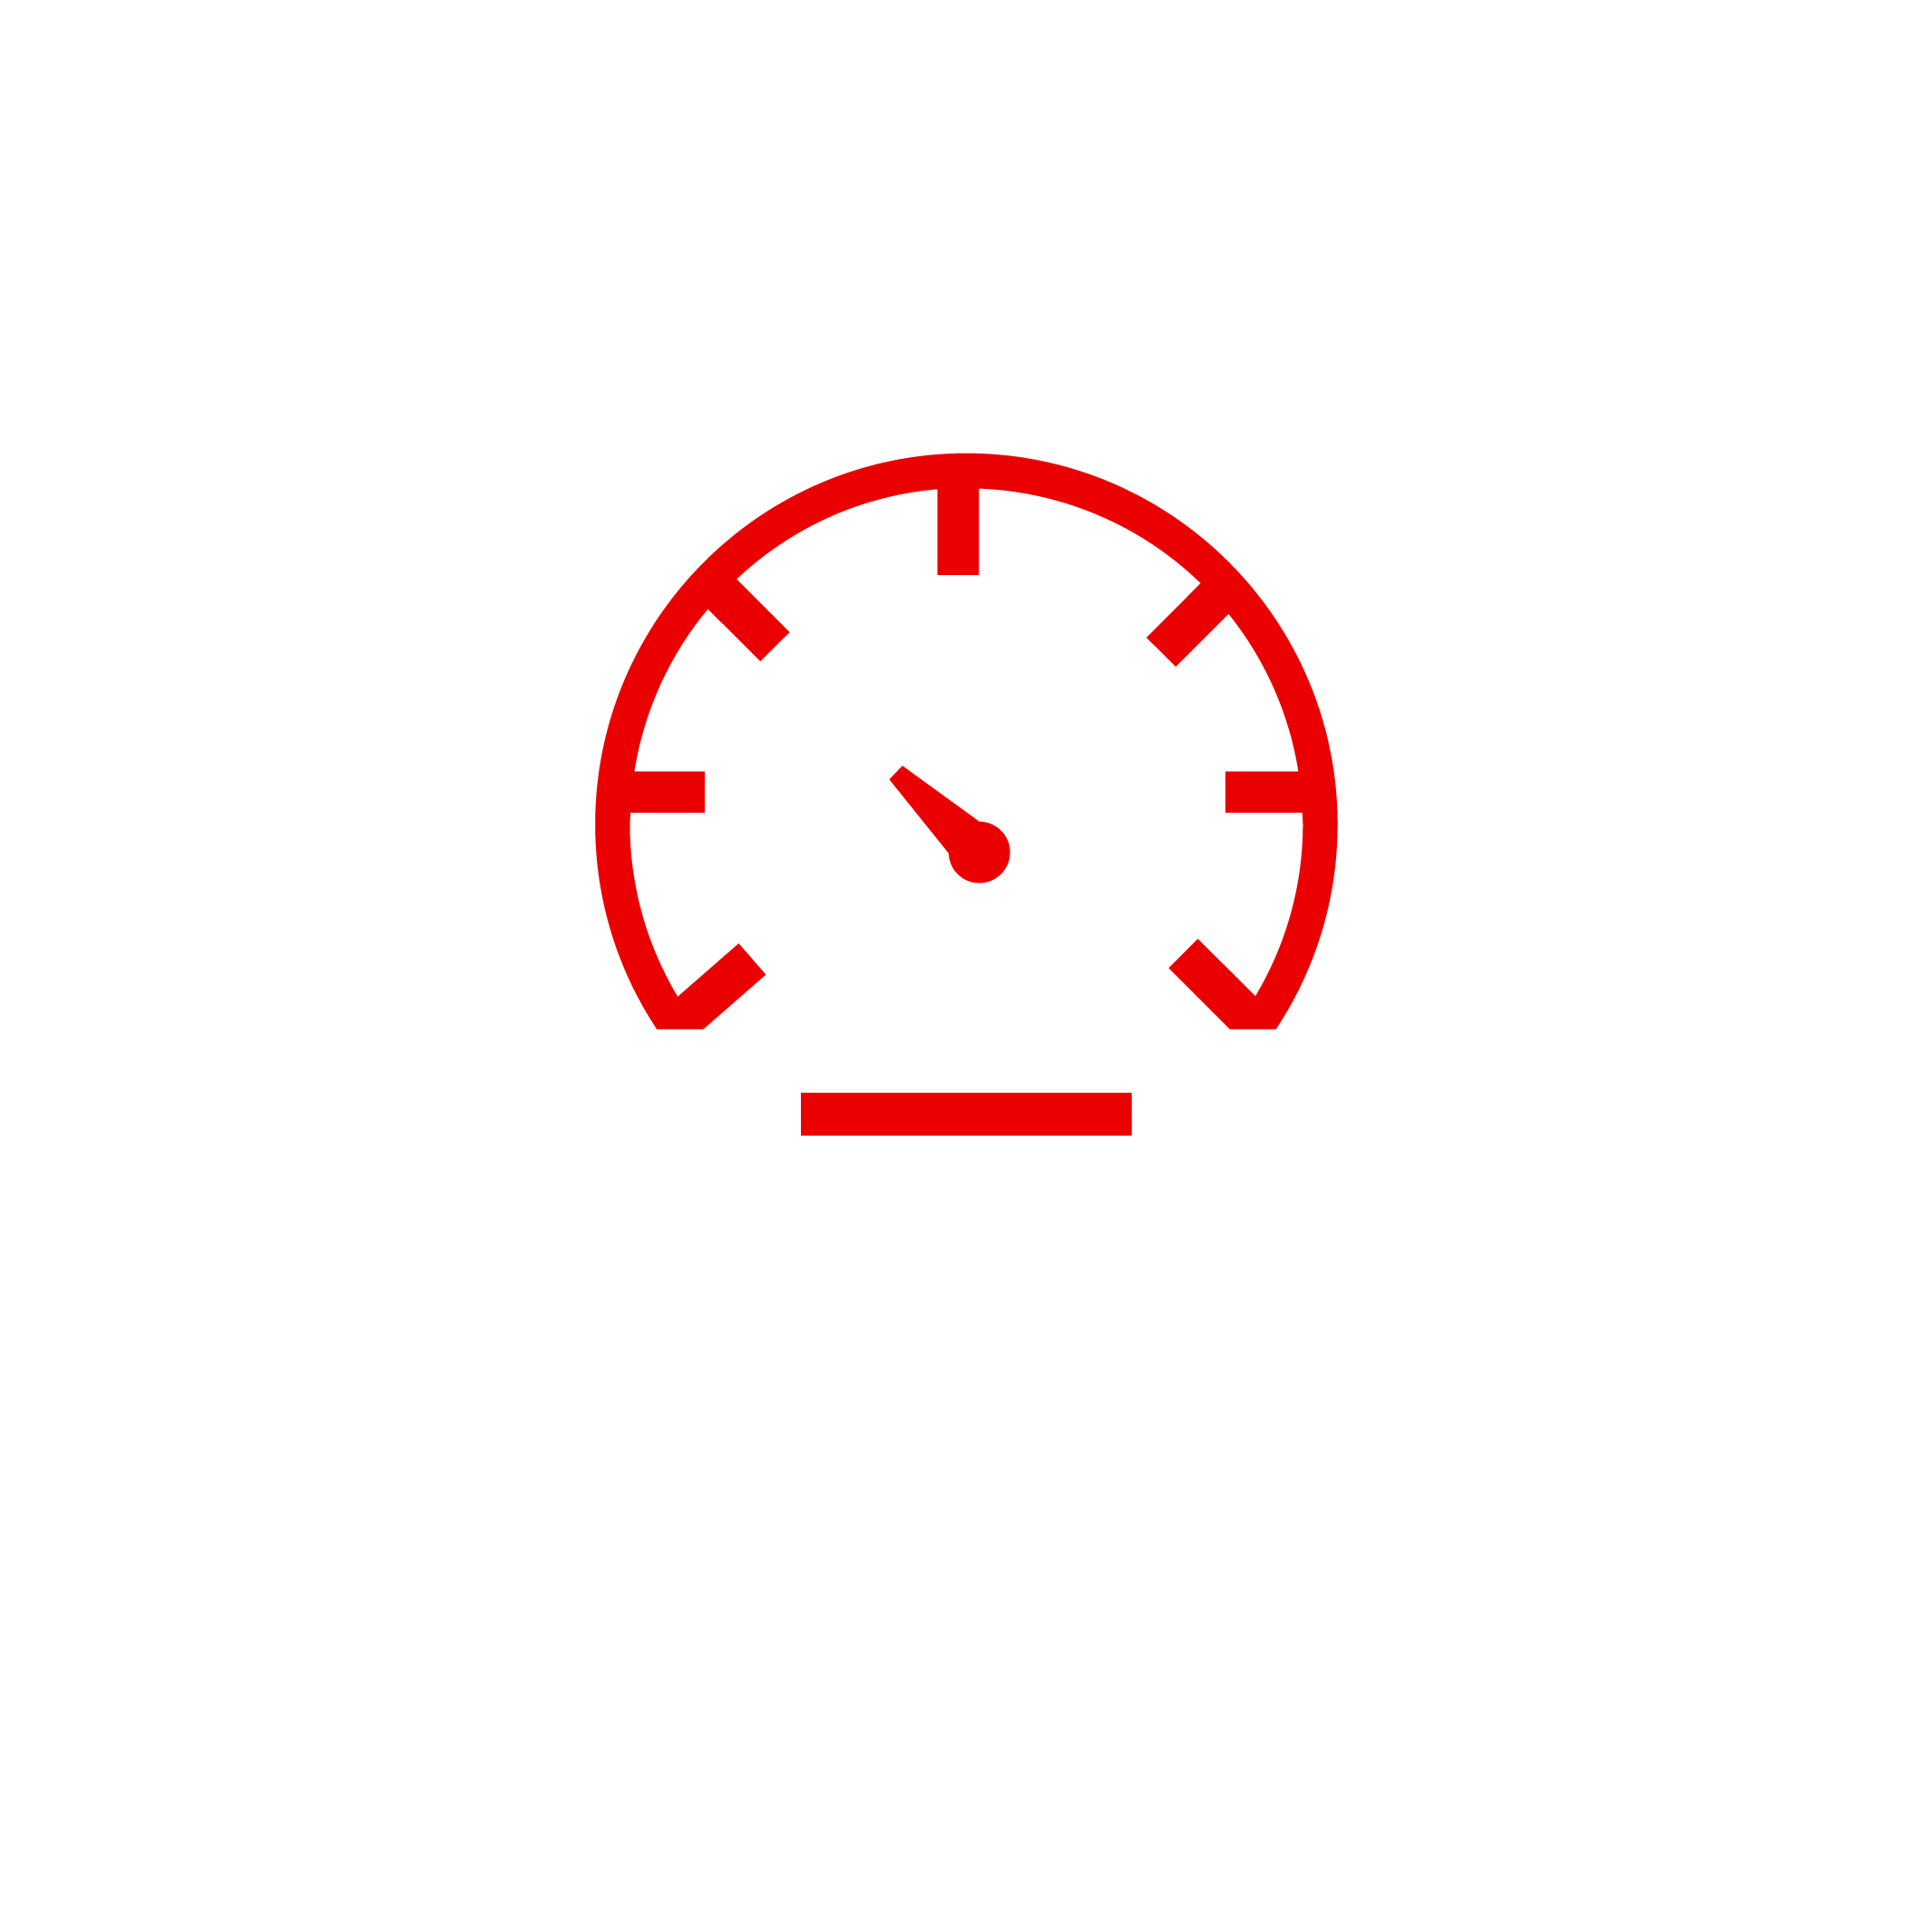 Vehicle Mileage